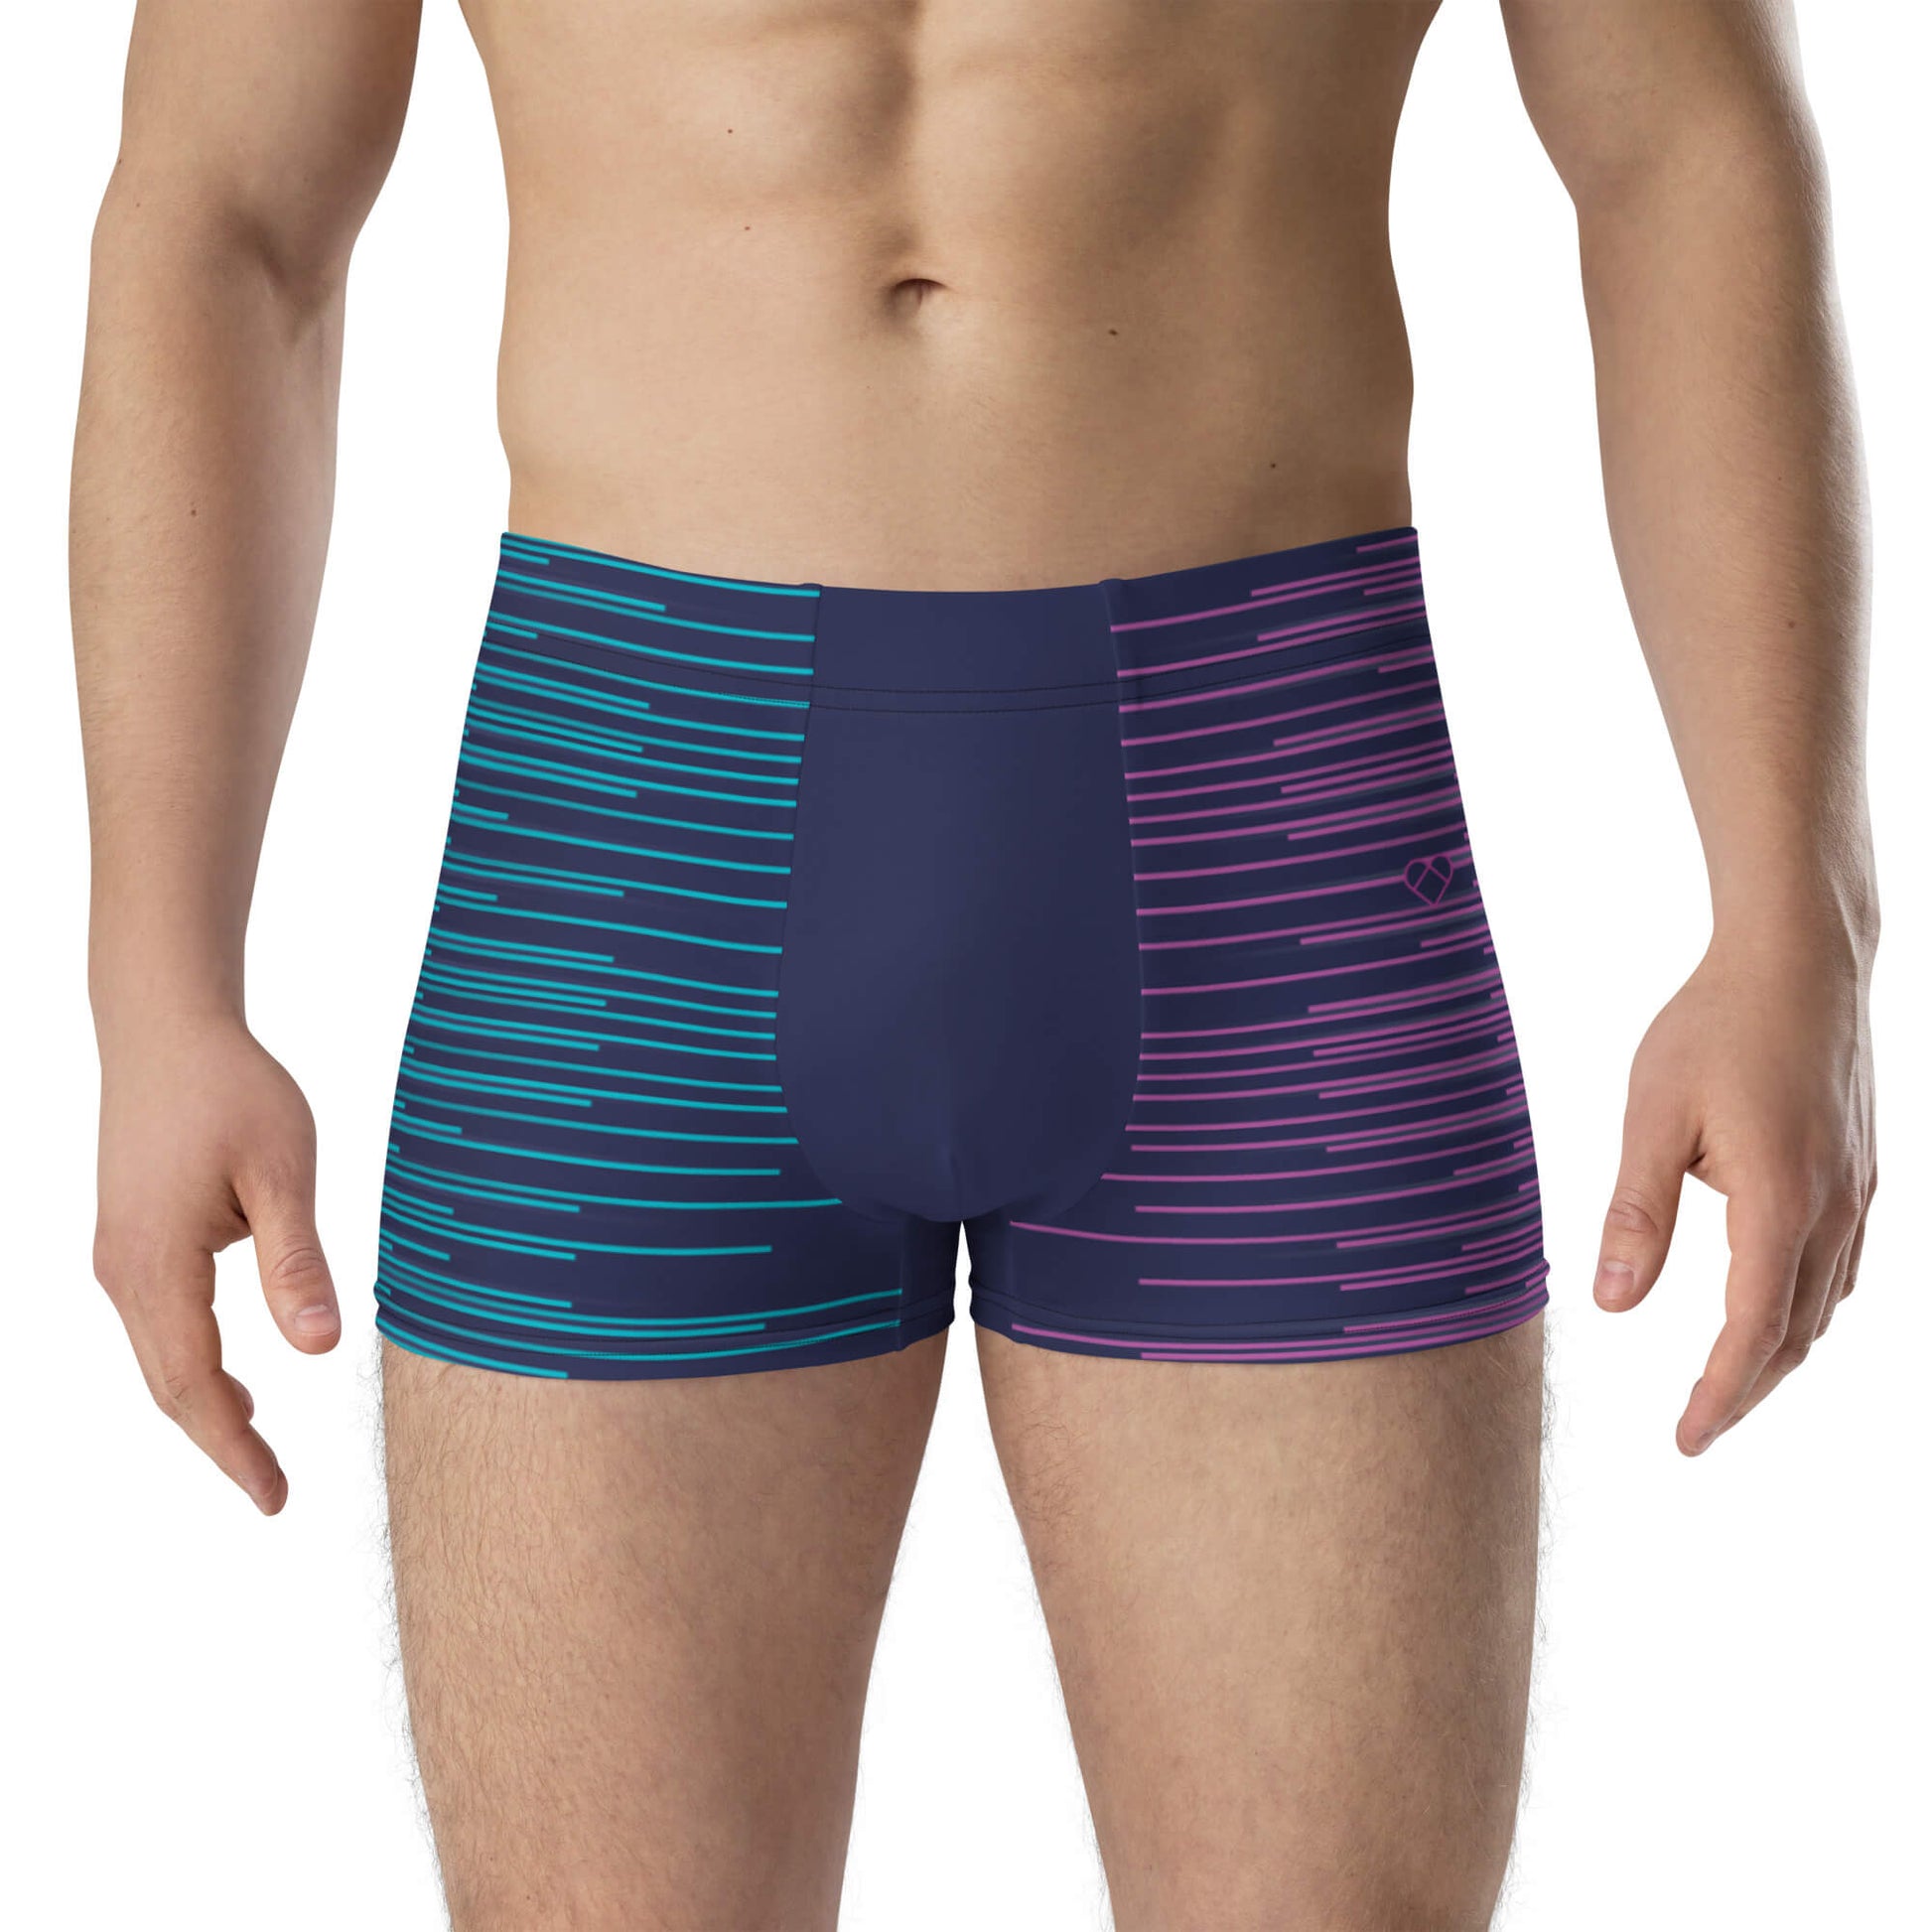 Men's Underwear for Everyday Comfort - Slate Charm Boxer Briefs